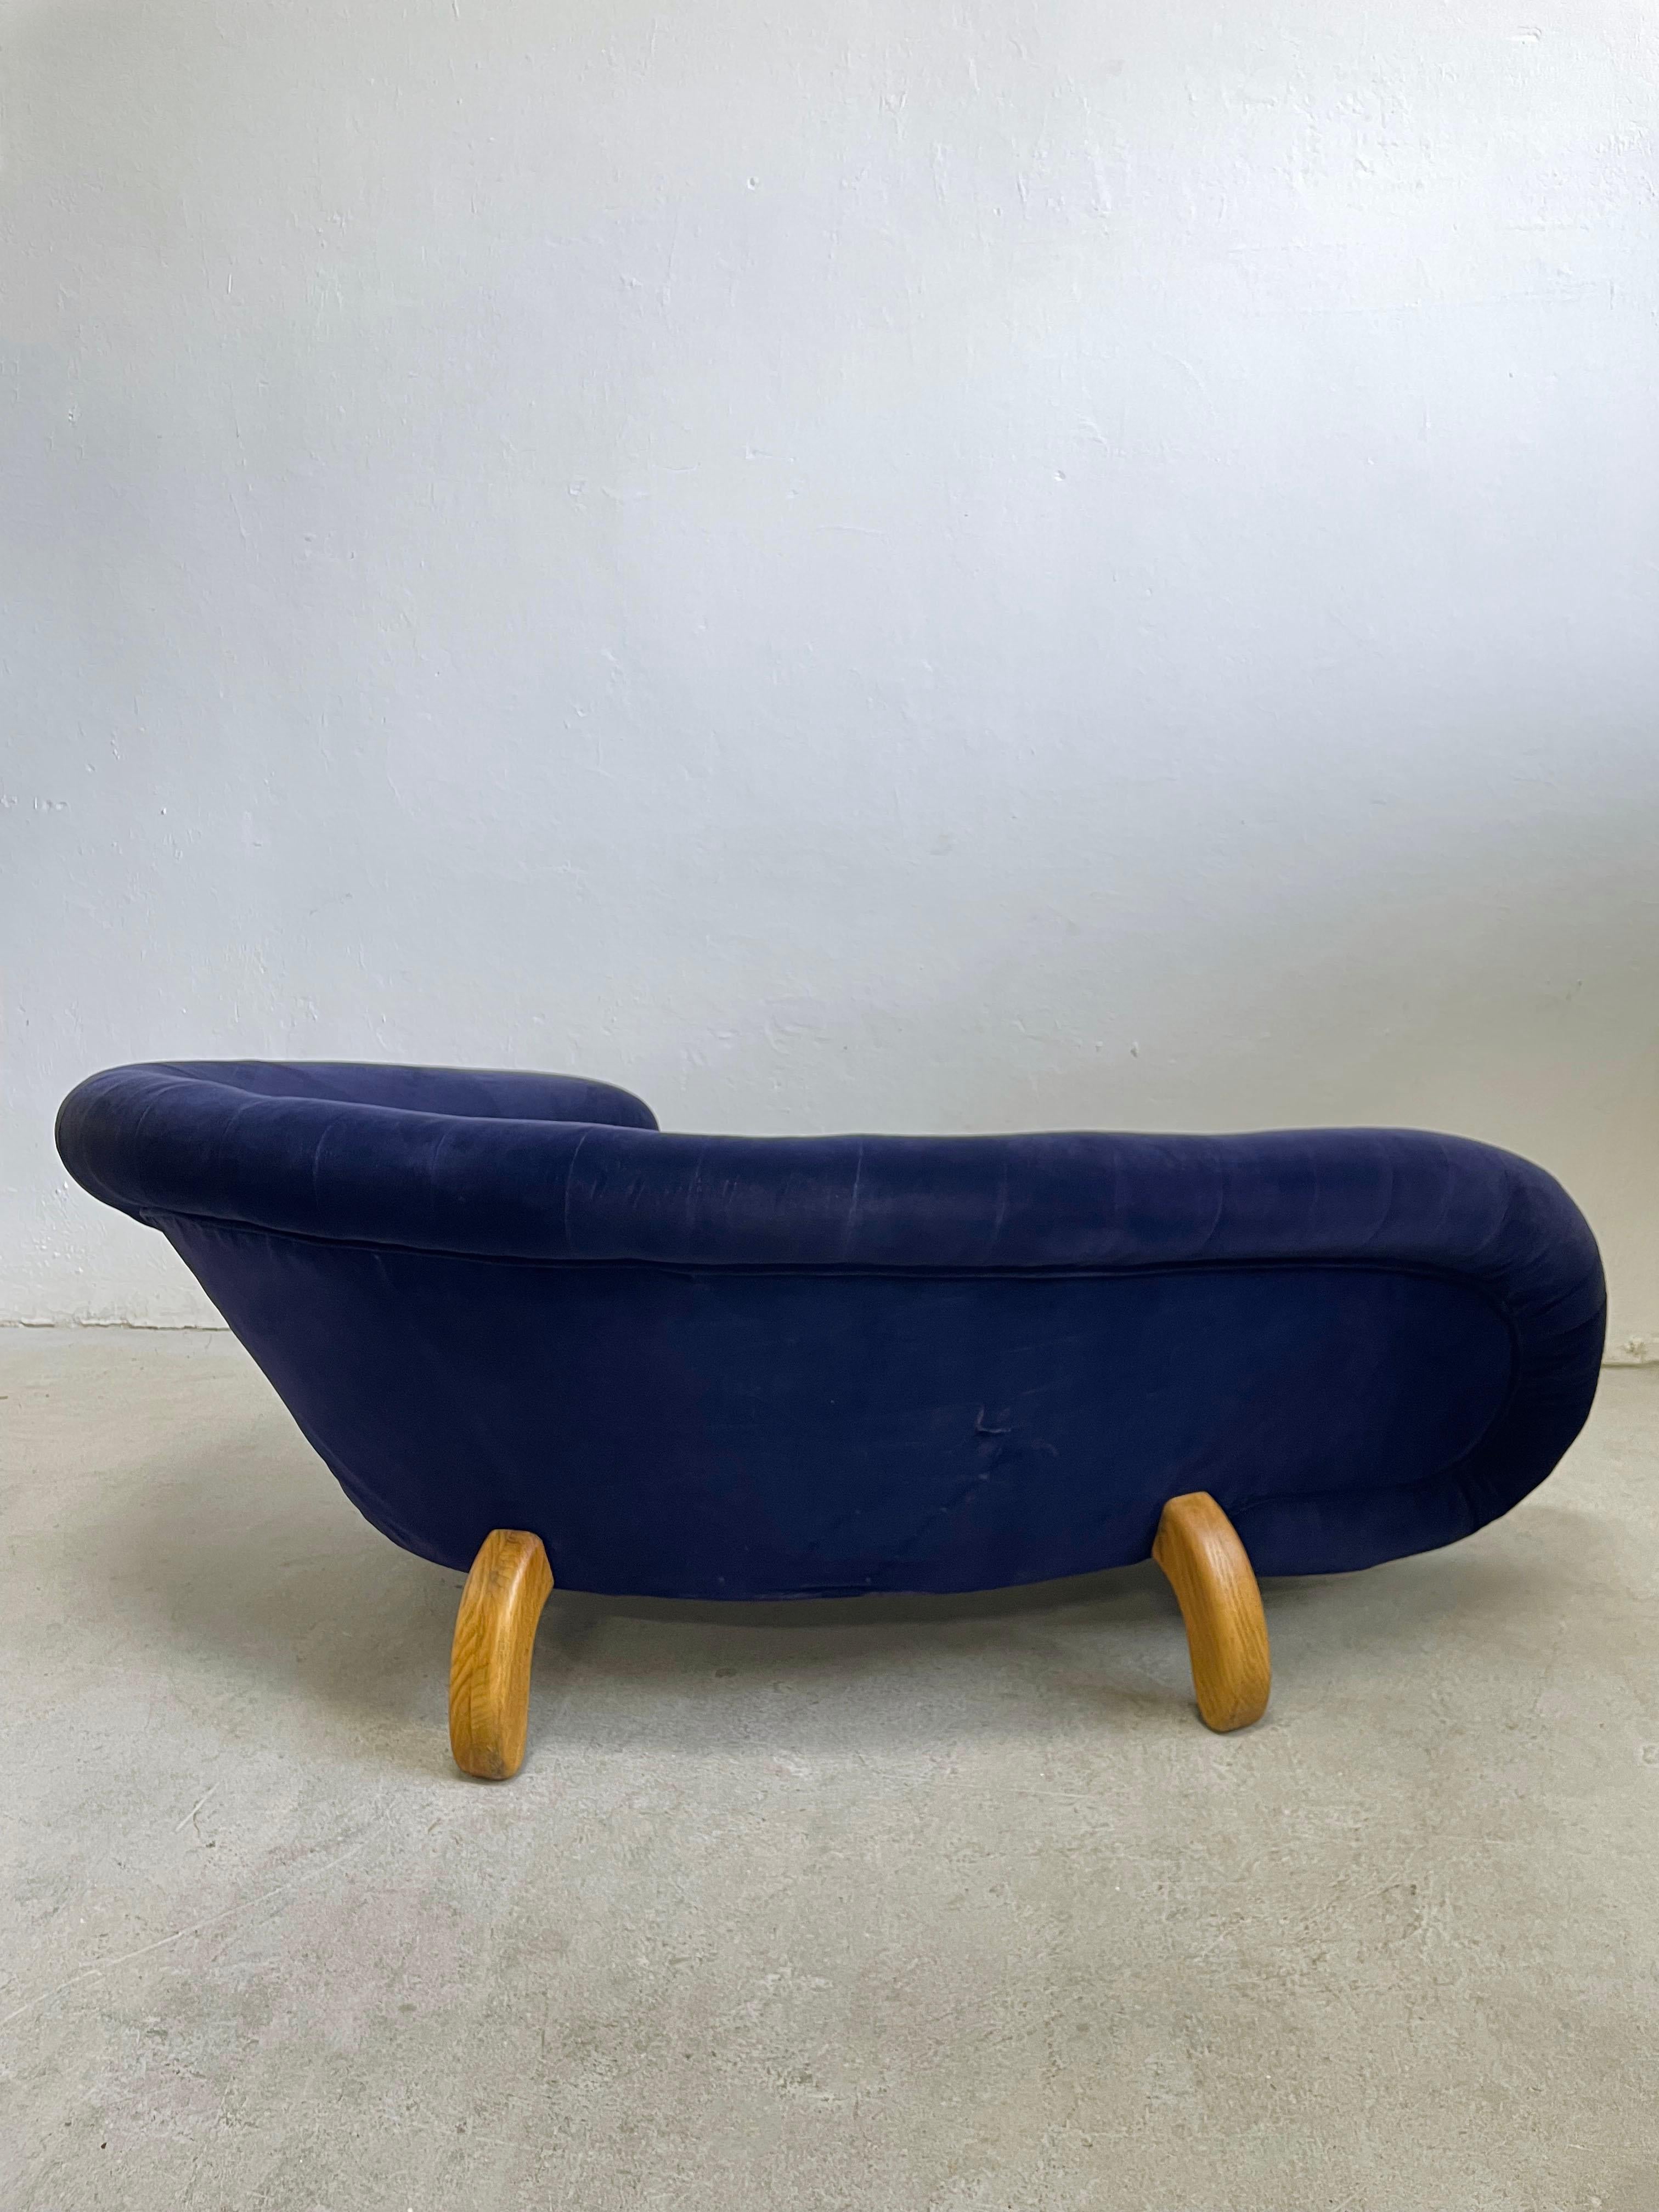 Vintage 20th Century Modern Serpentine Curved Velvet Sofa in Navy Blue Color For Sale 4